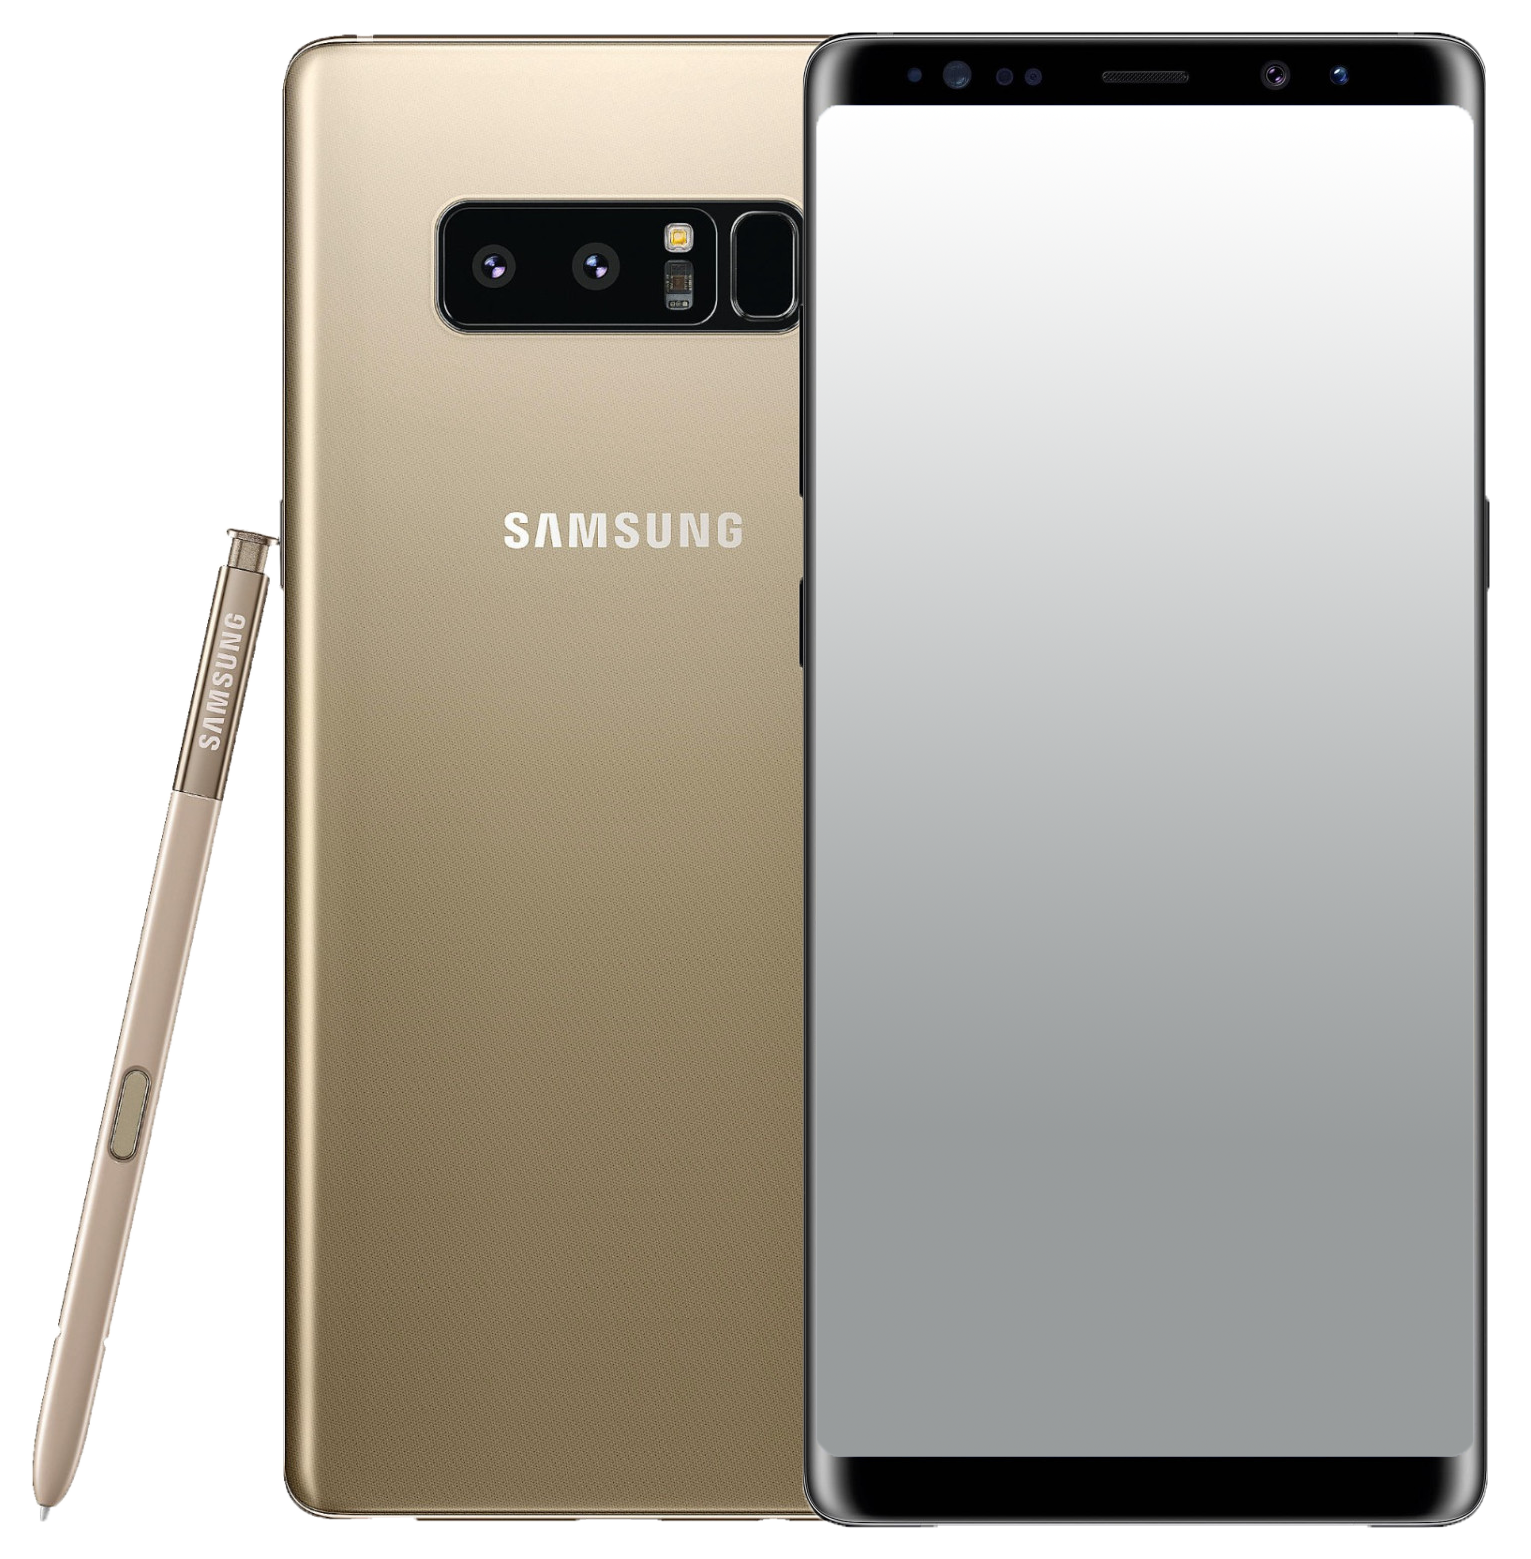 Samsung Galaxy Note 8 Dual Sim gold - Ohne Vertrag